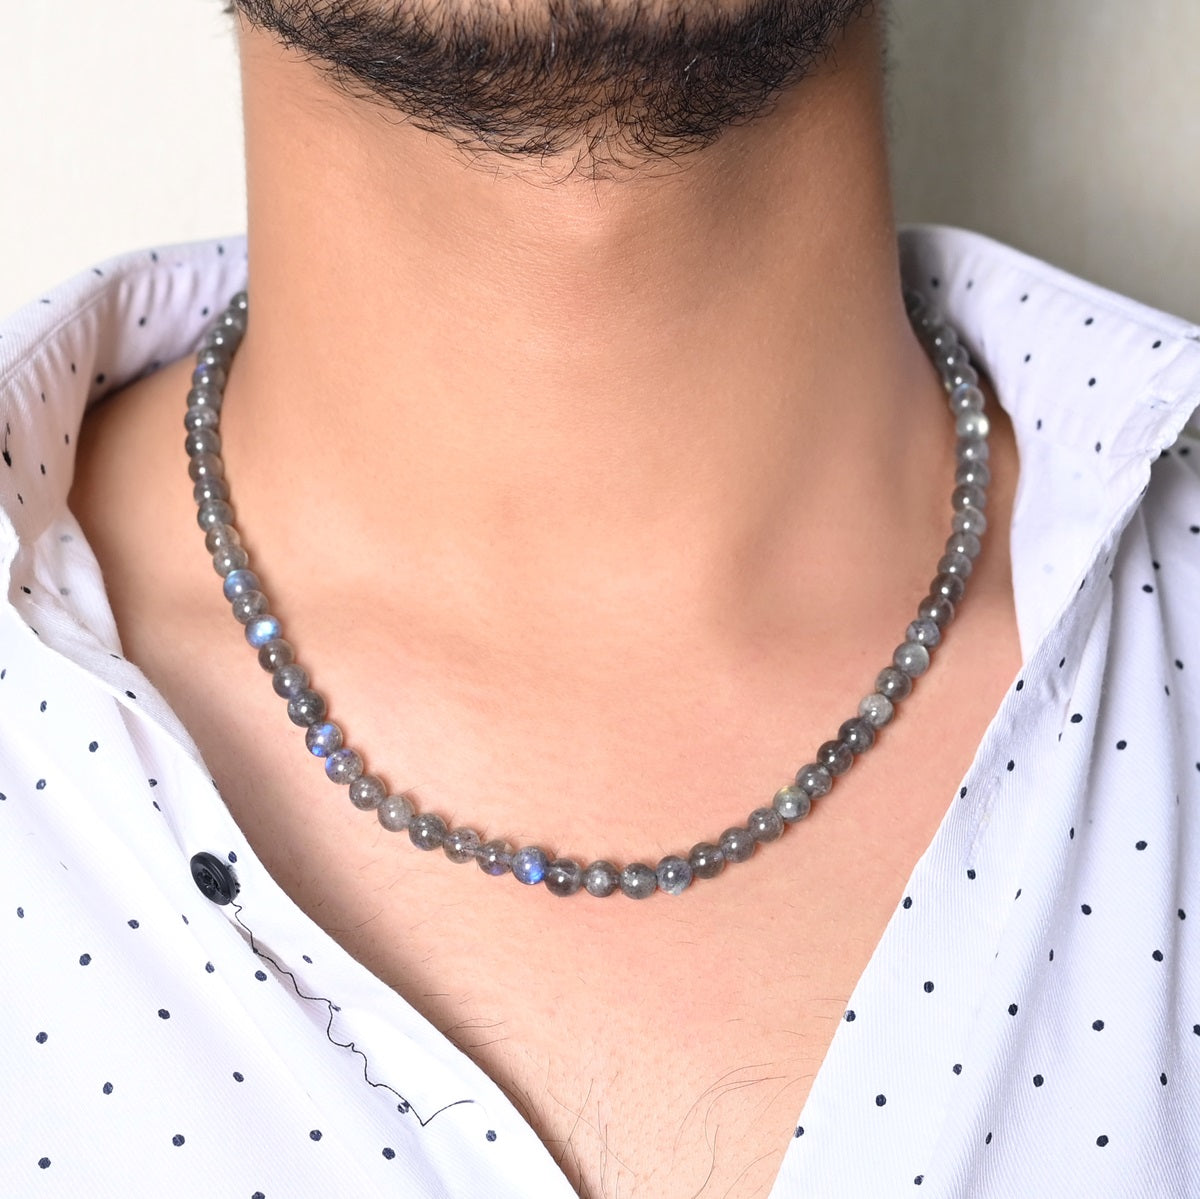 Men's Labradorite Gemstone Silver Necklace: Casual sophistication for everyday wear